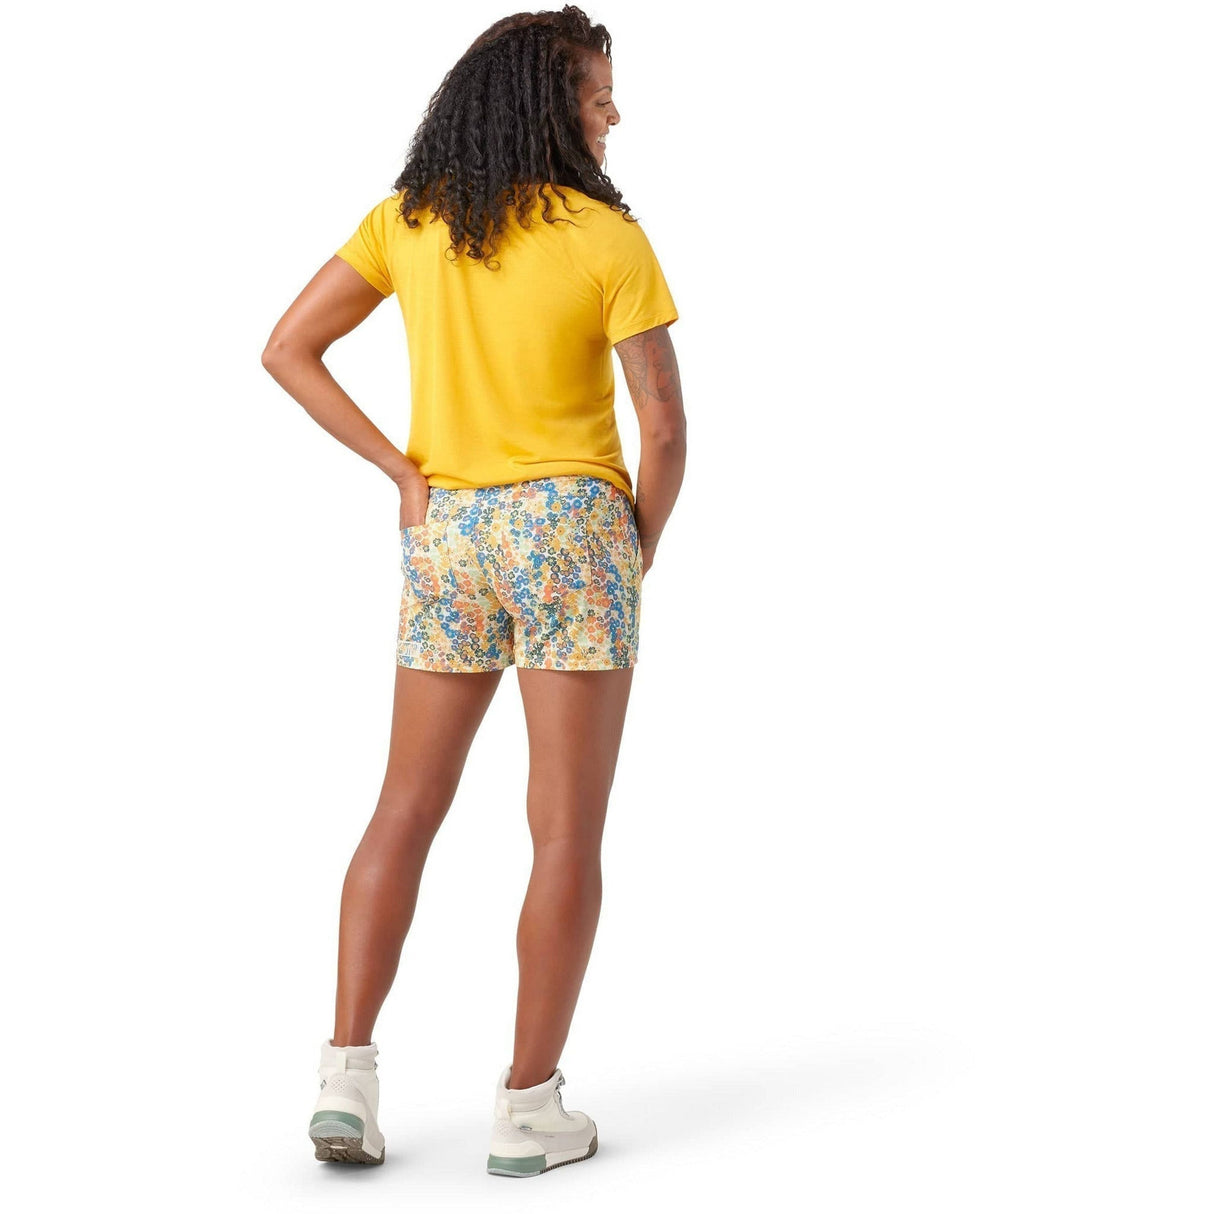 Smartwool Womens Hike Shorts  - 